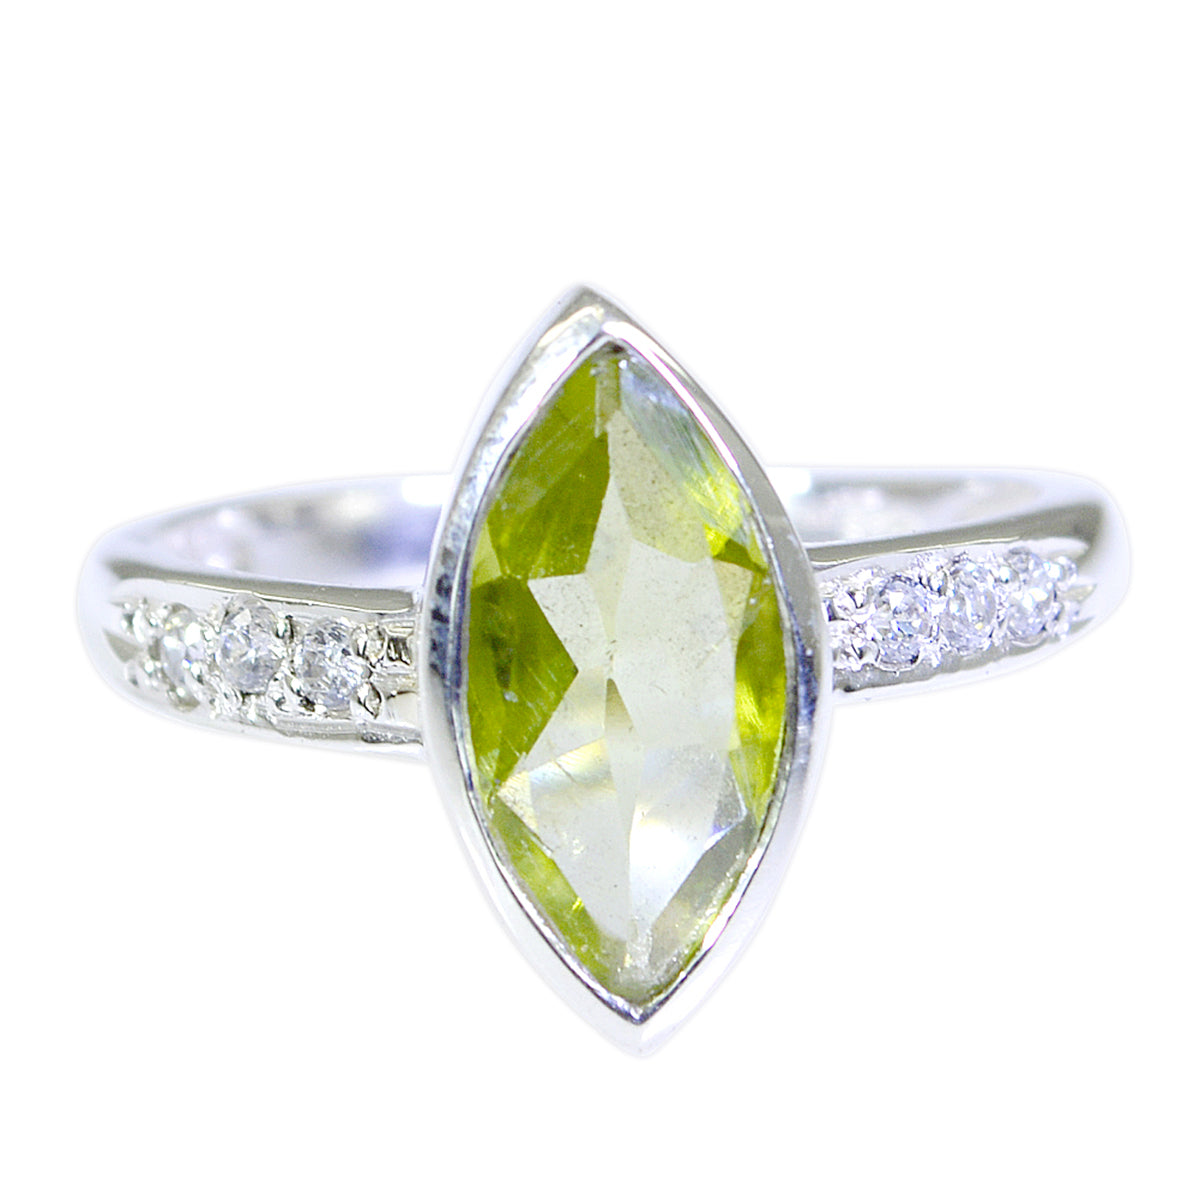 Riyo Charming Gemstone Peridot 925 Sterling Silver Rings Gem Jewelry